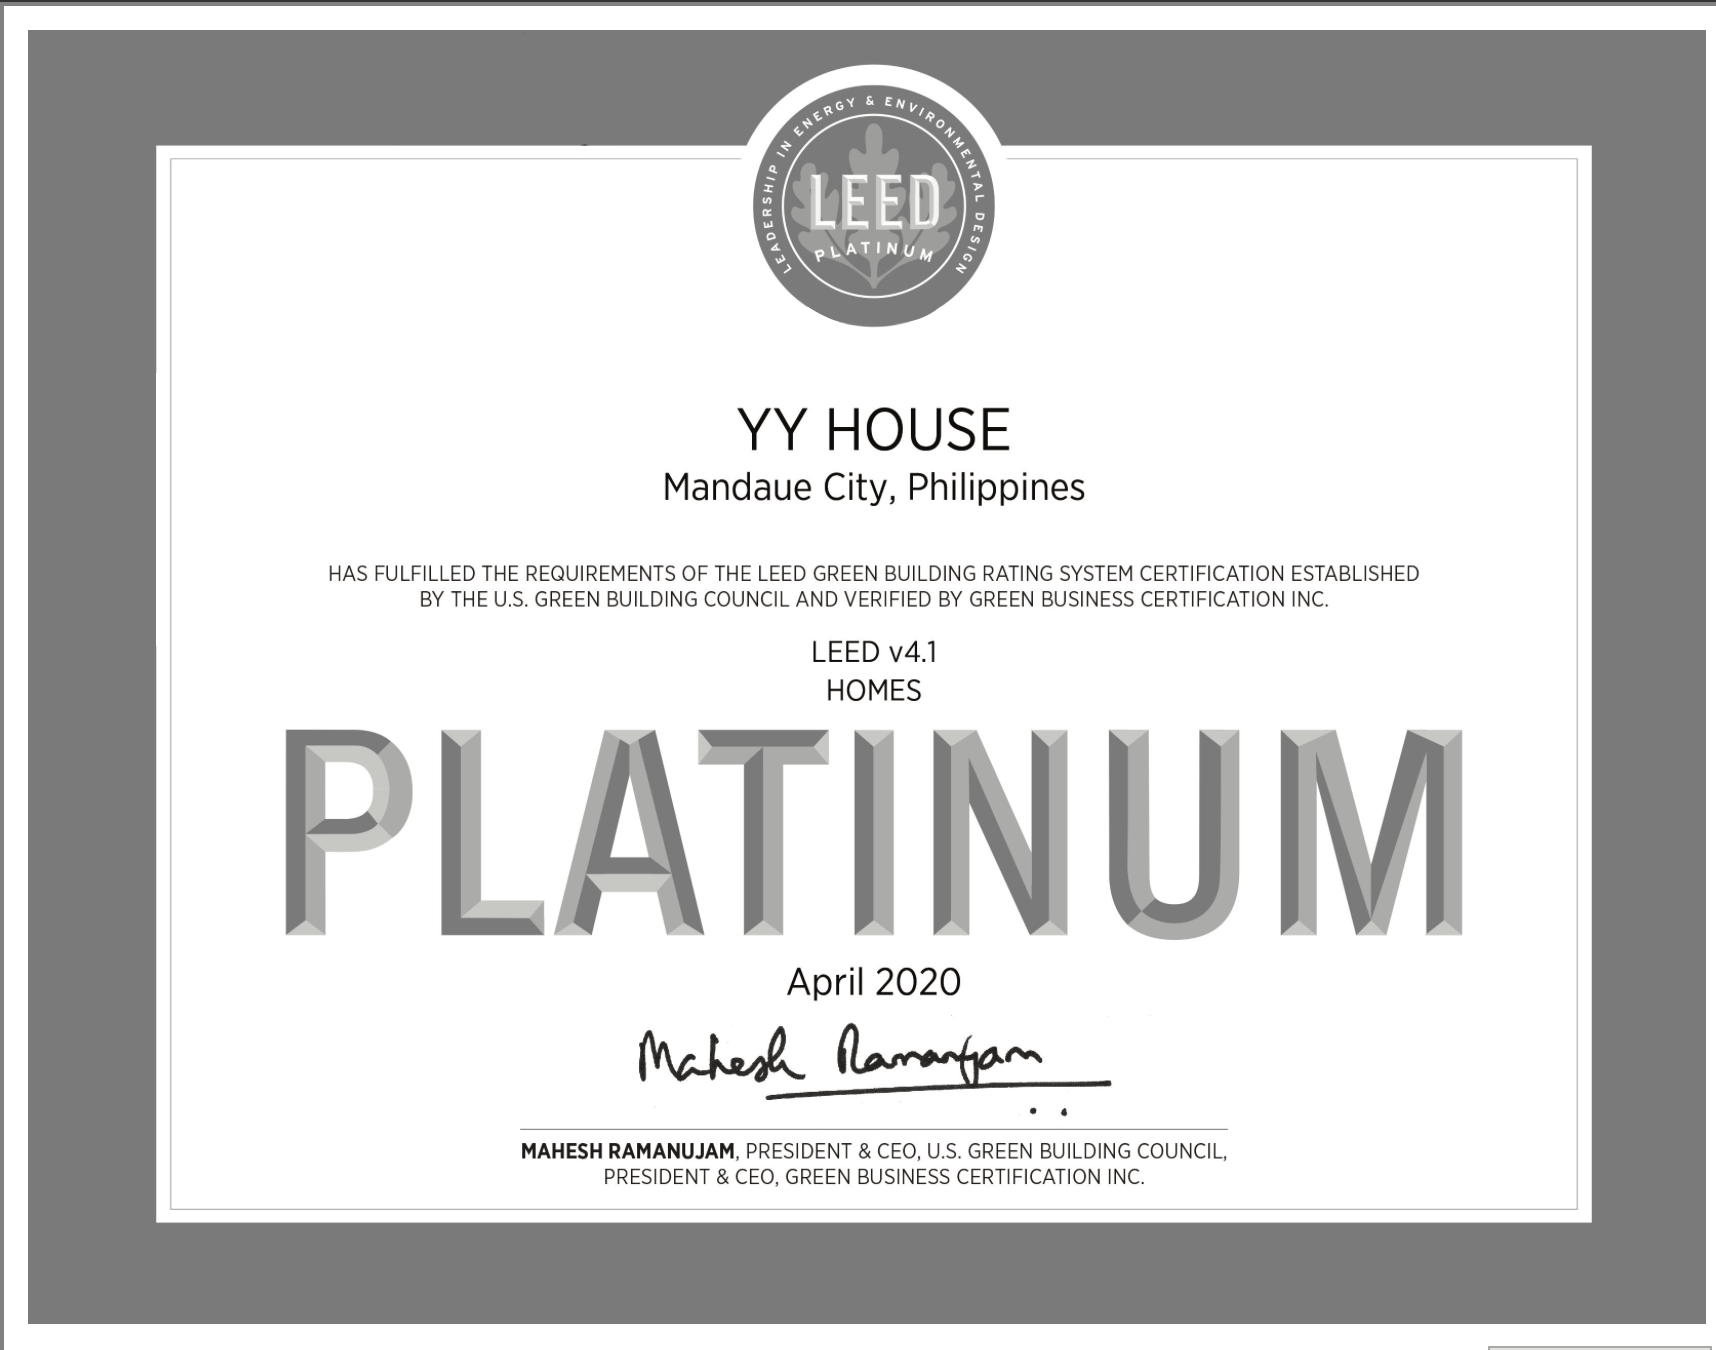 LEEDS Platinum Award - YY House